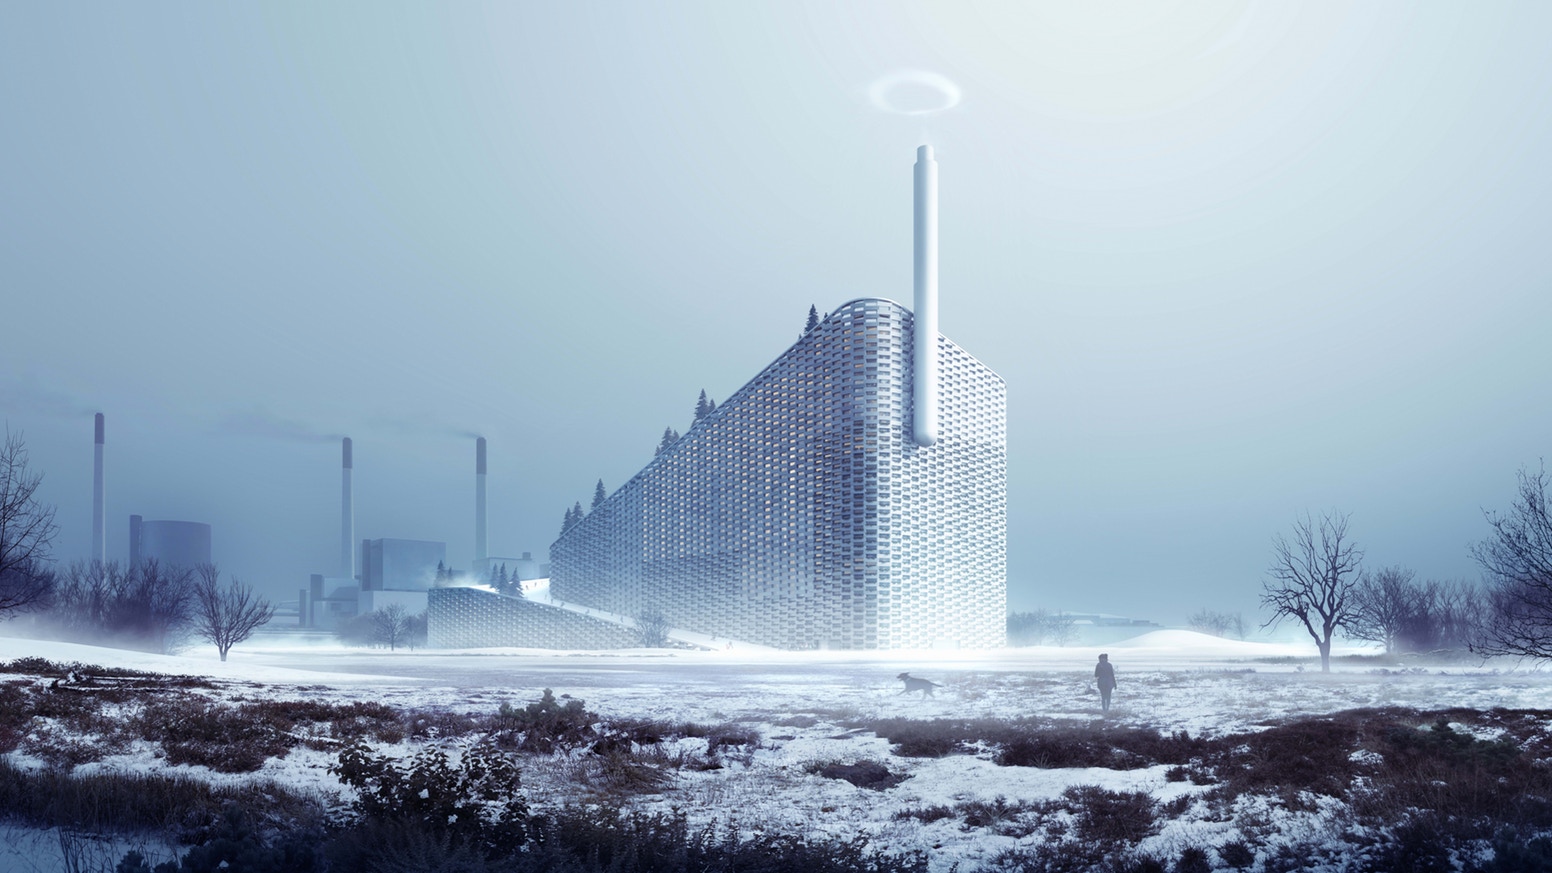 Copenhagens power plant with ski slope1